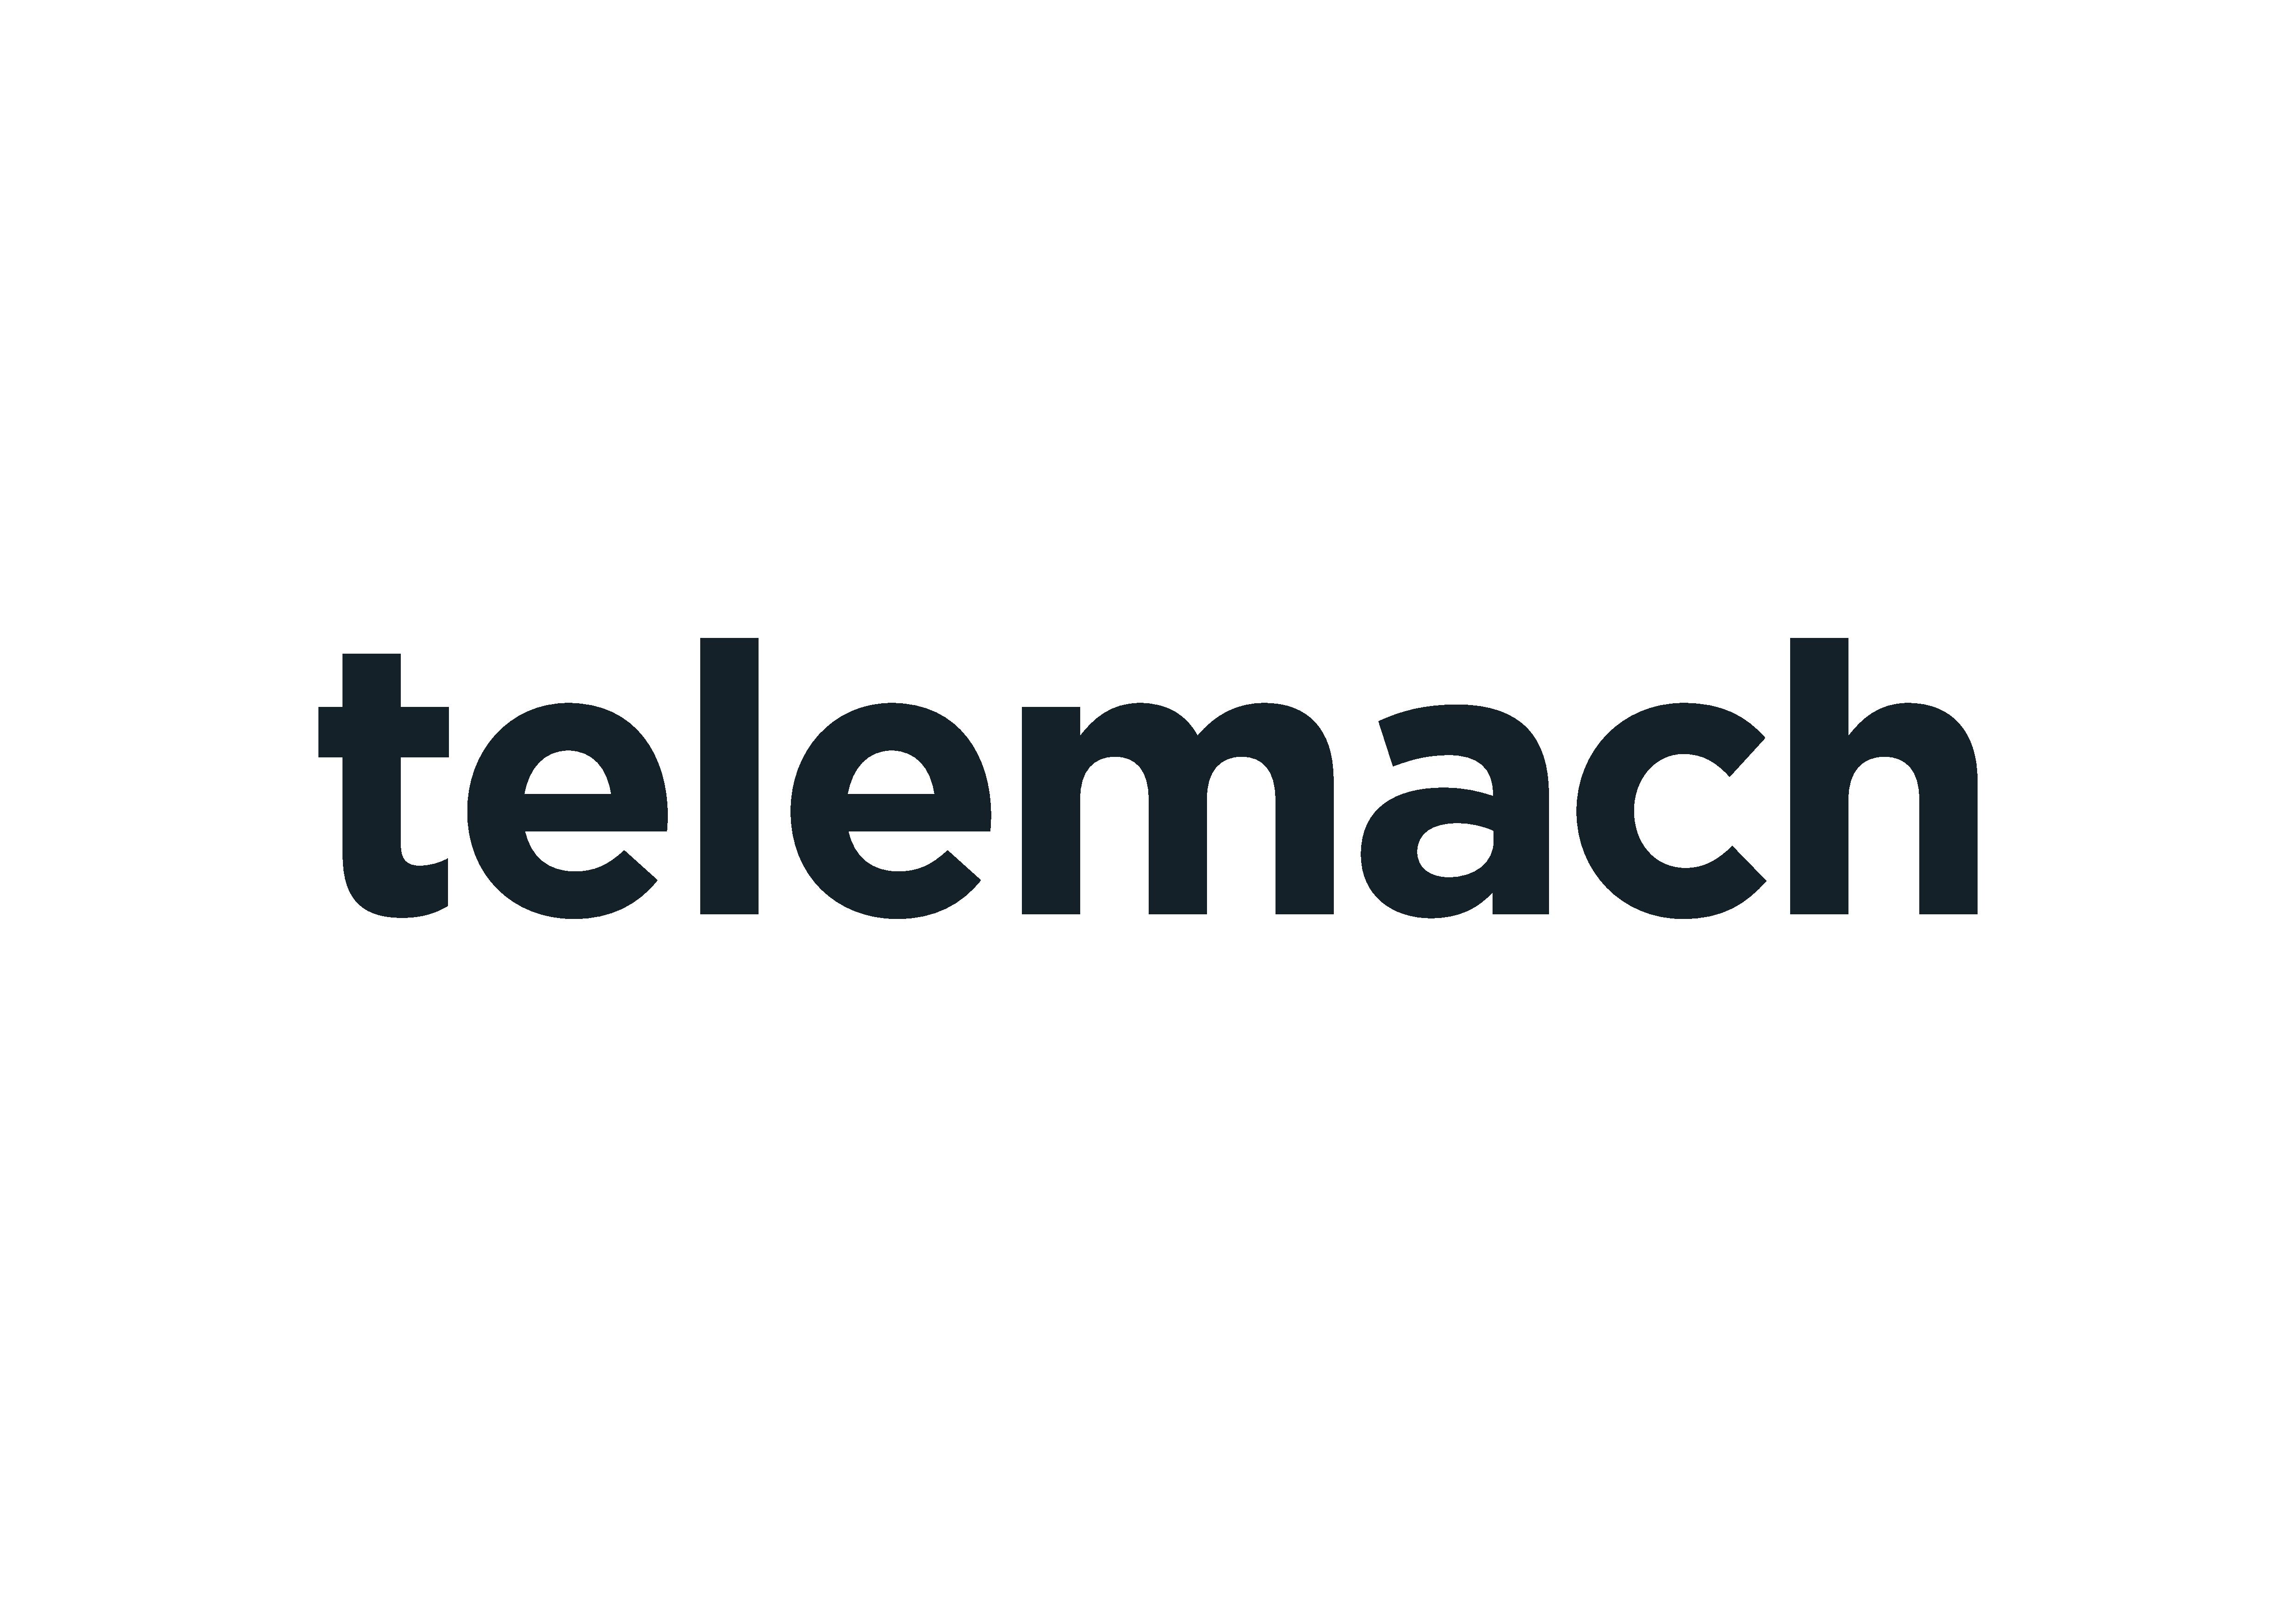 telemach logo vector negativ page 001